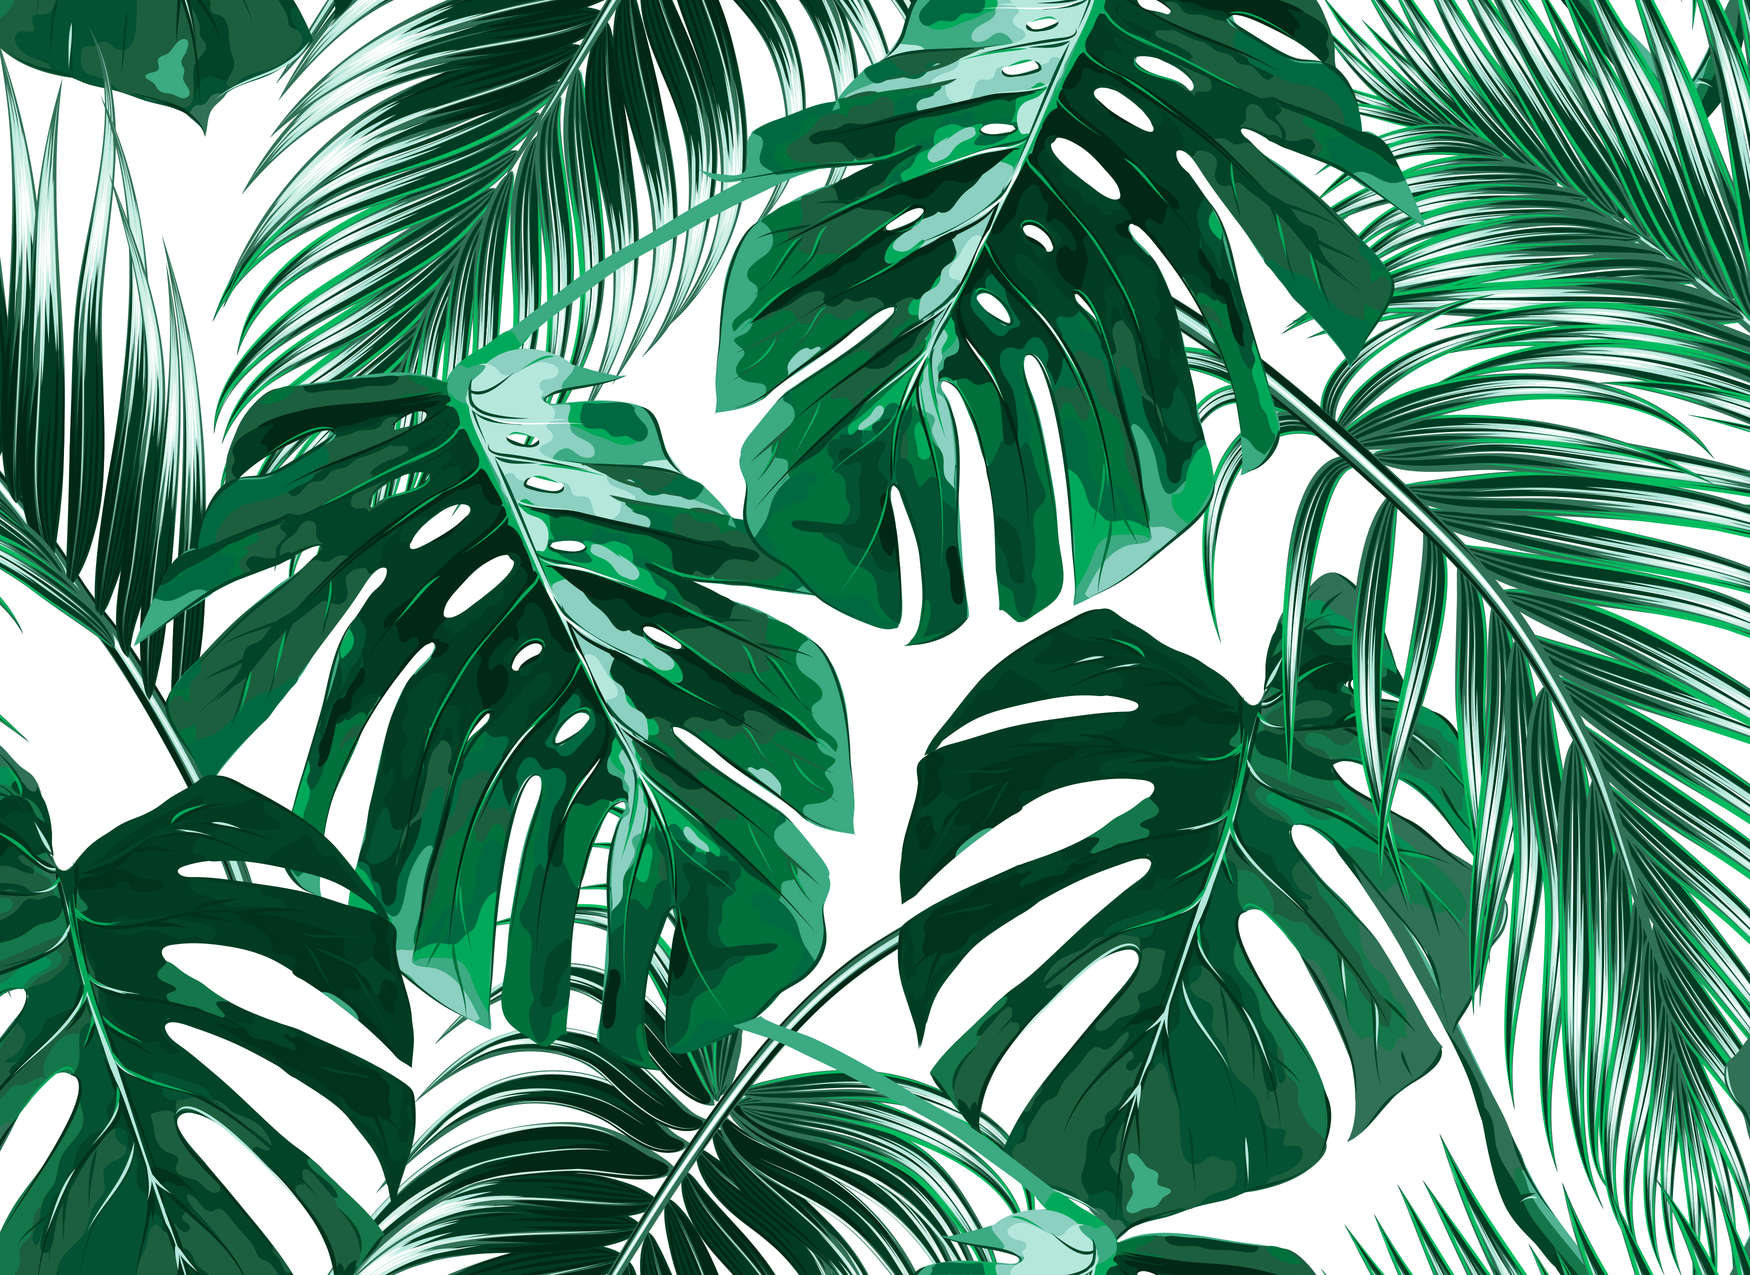             Palm Leaves Art Style Behang - Groen, Wit
        